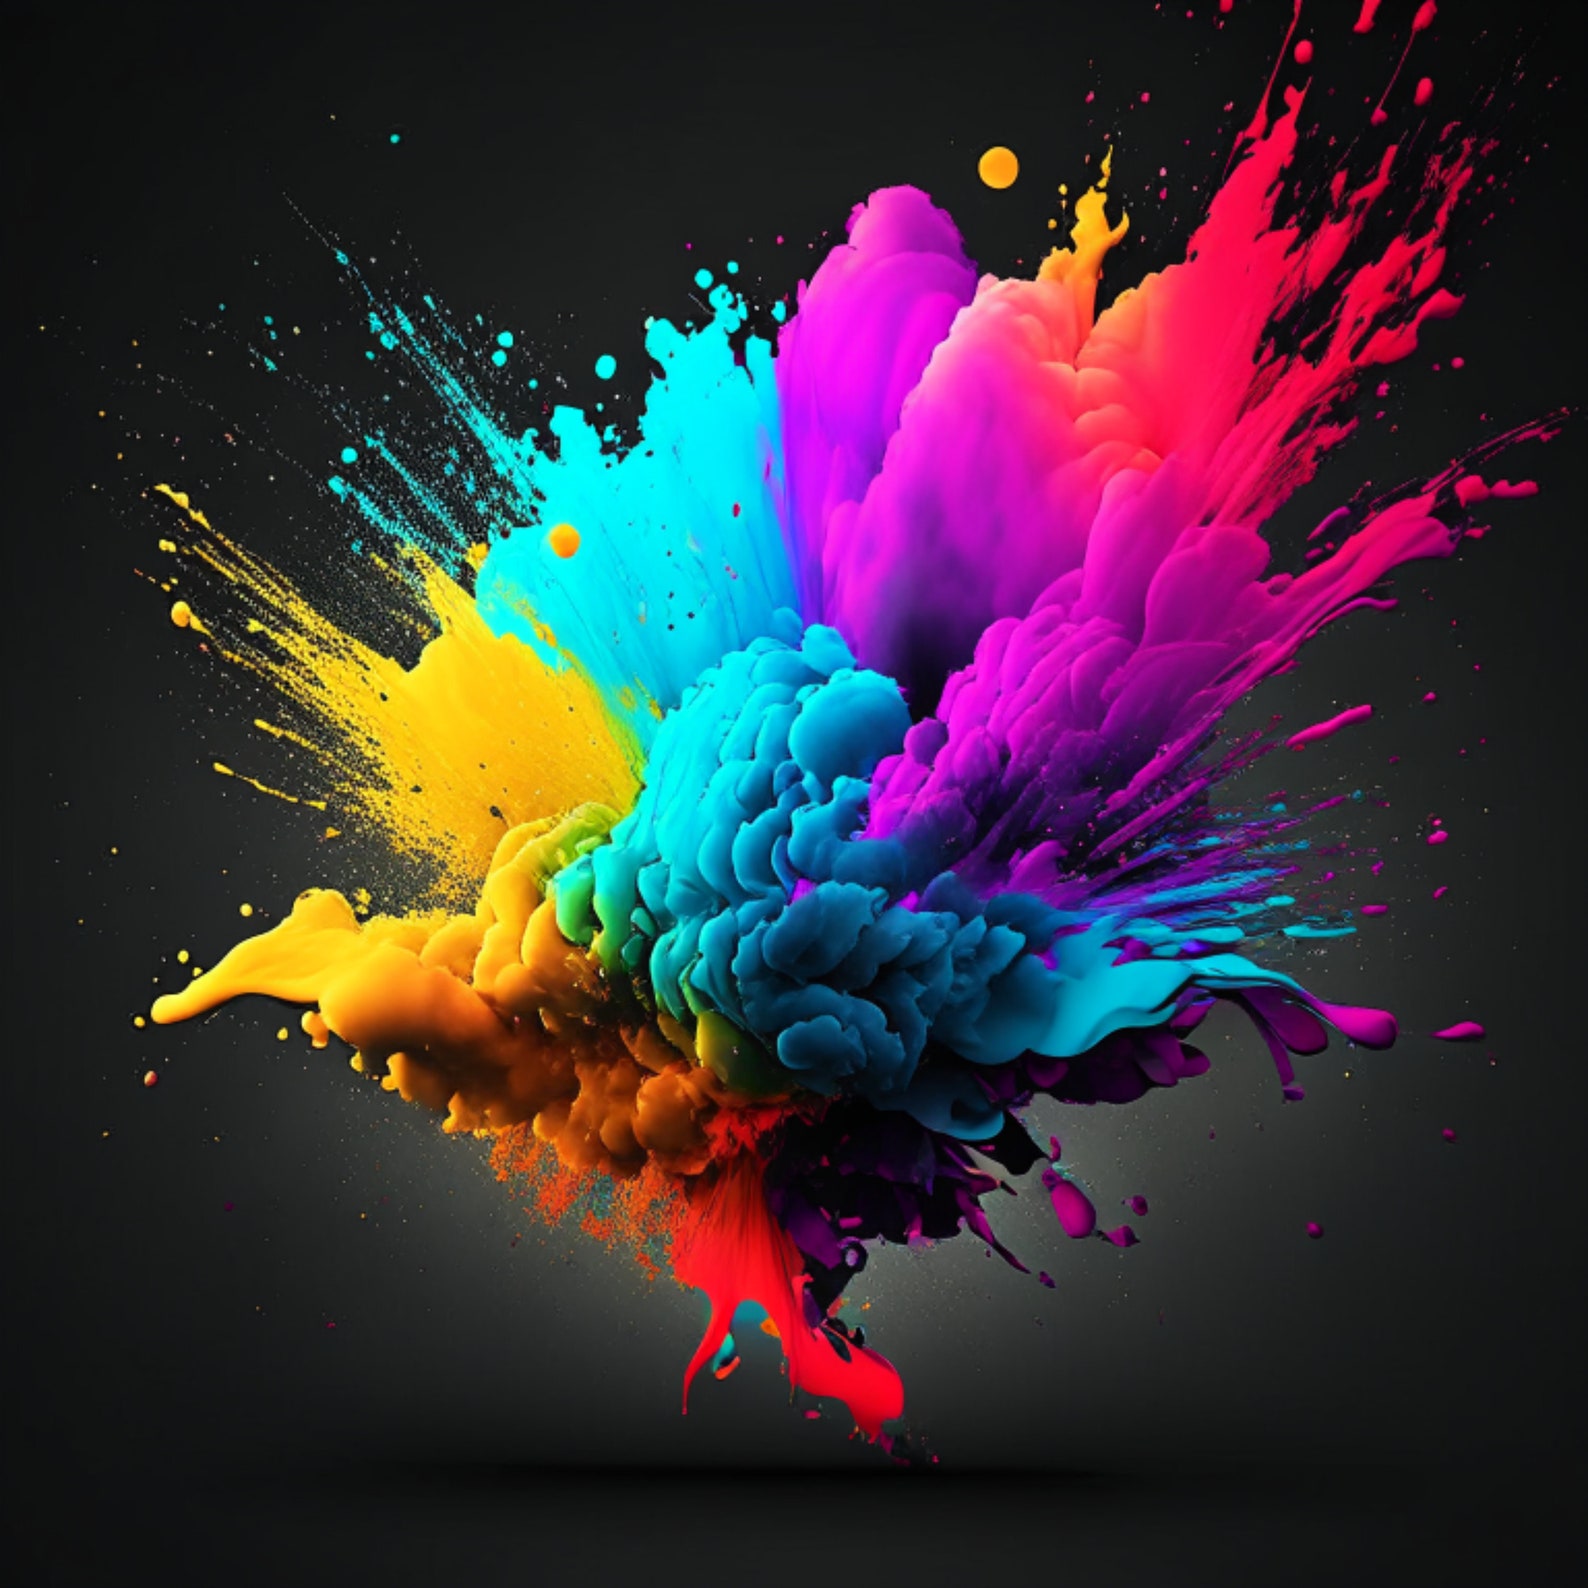 Color Splash Effect Clipart 300dpi PNG Graphics Instant Download for ...